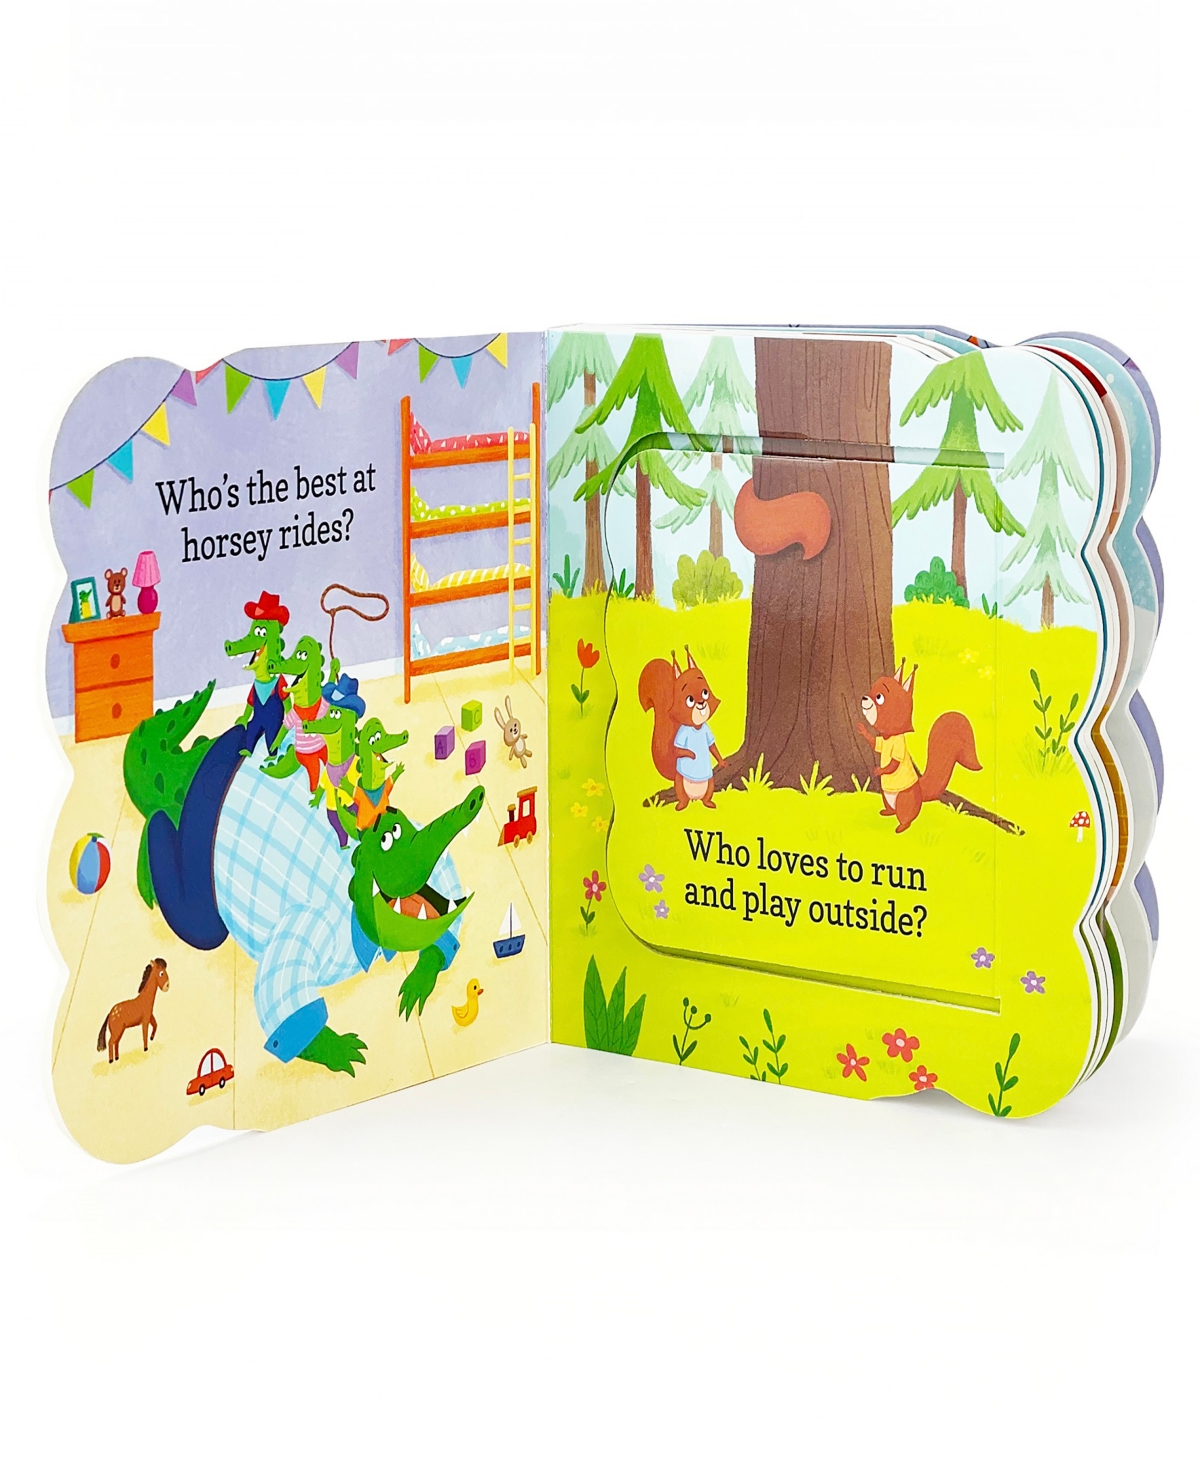 Shop Readerlink Cottage Door Press-babies Love Daddy-a Lift-a-flap Board Book In No Color